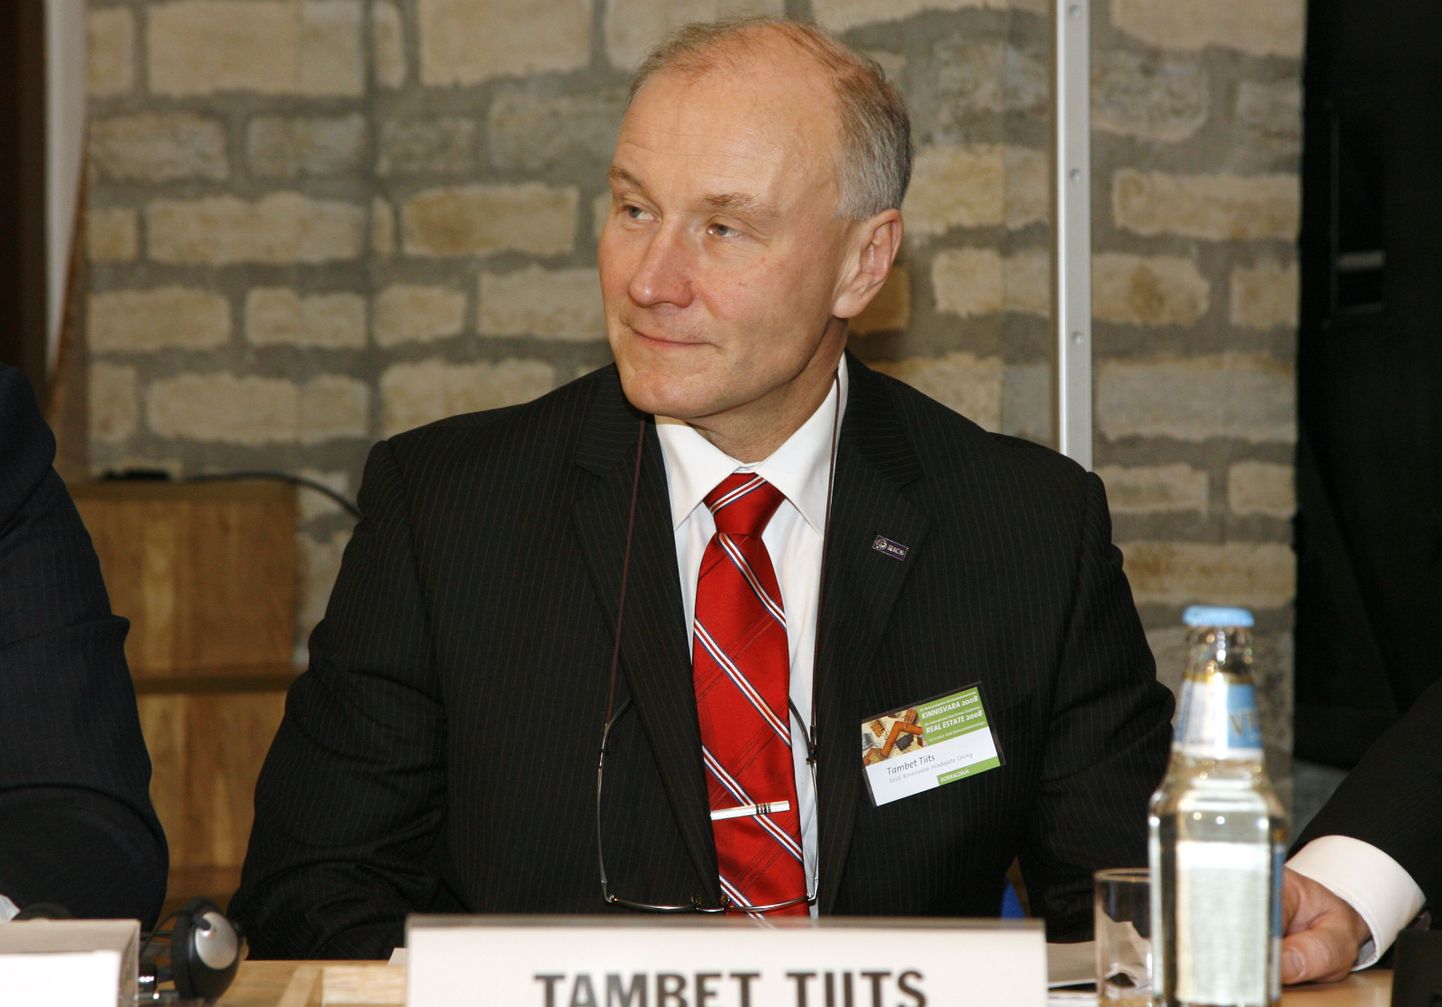 Tambet Tiits